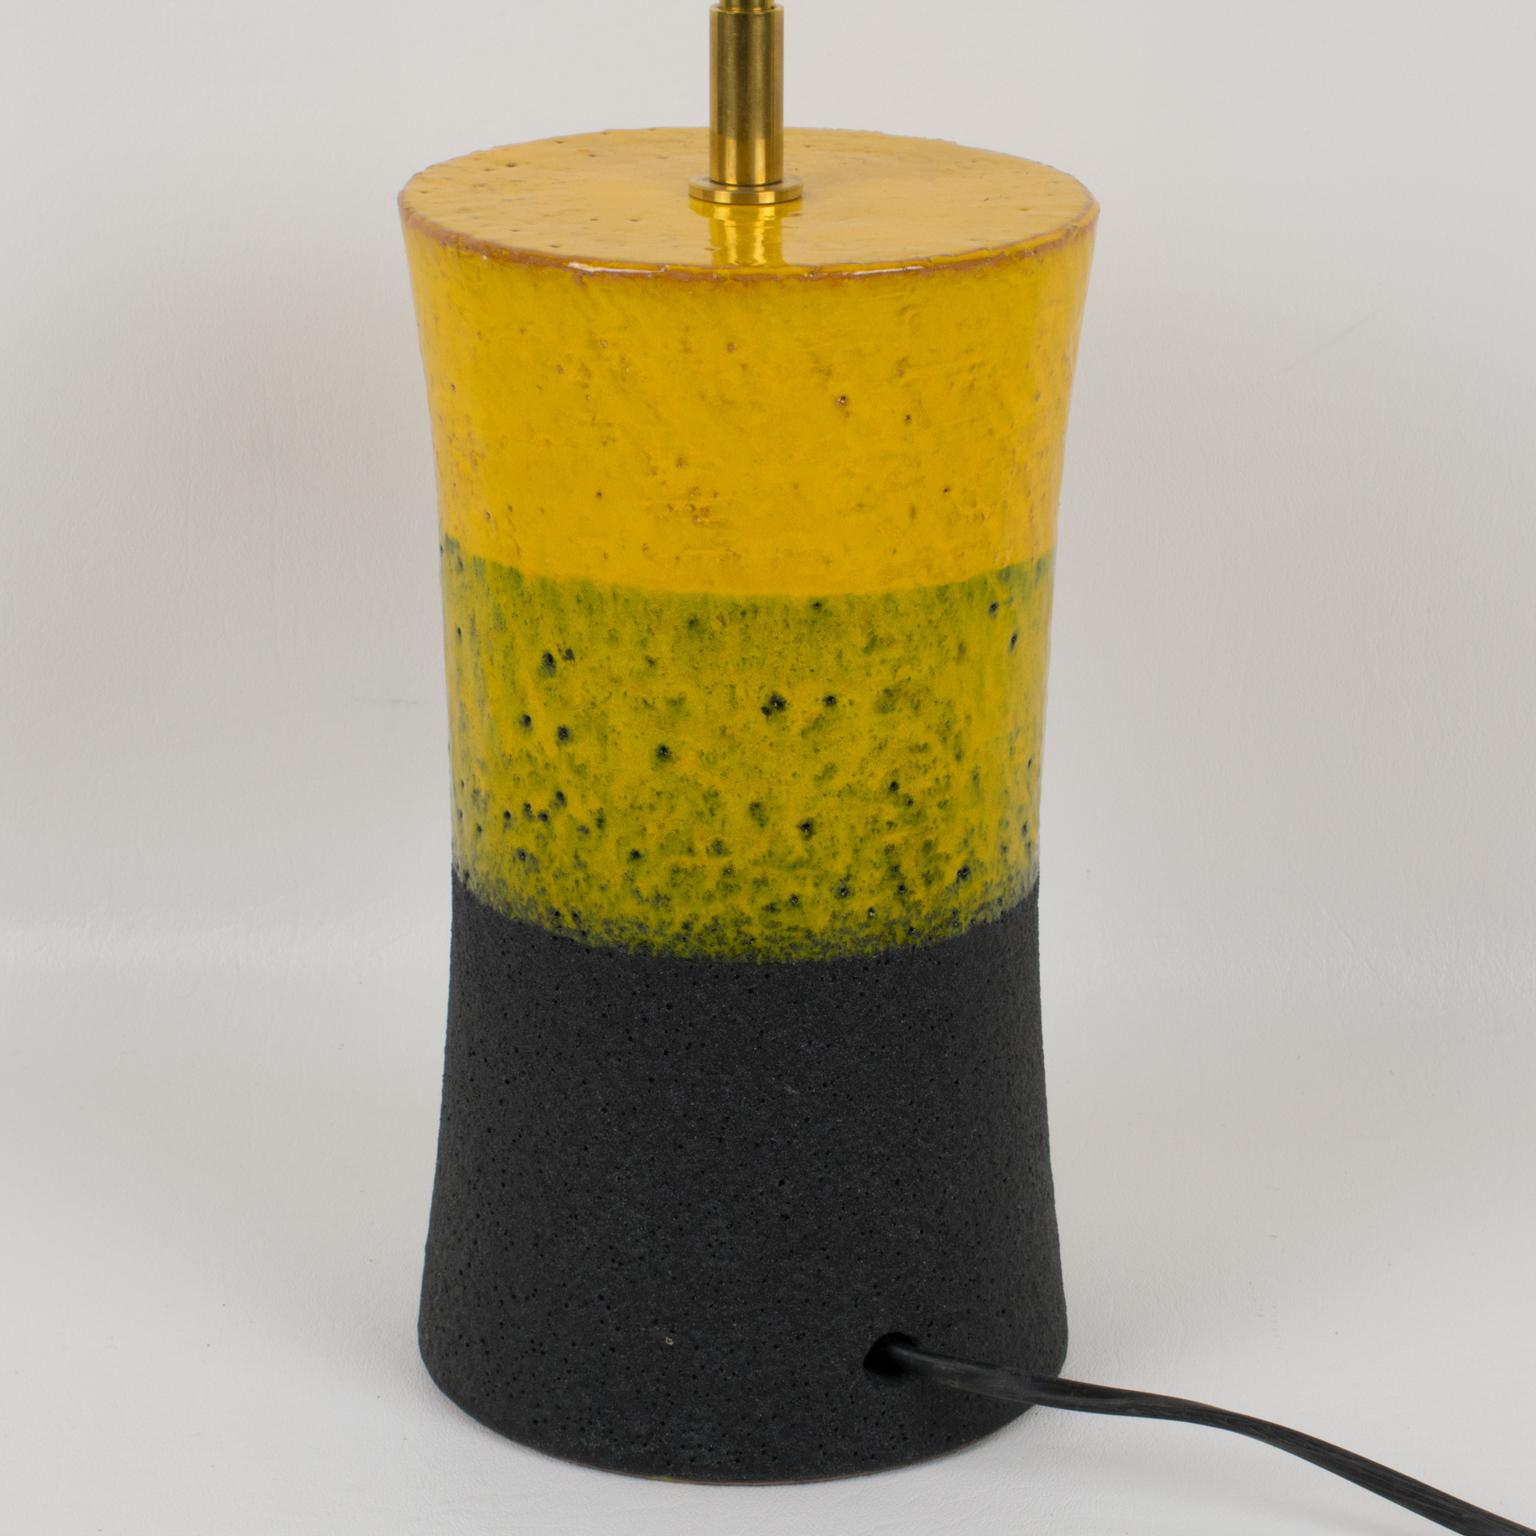 Aldo Londi for Bitossi Italy Mondrian Design Ceramic Table Lamp, 1960s For Sale 4